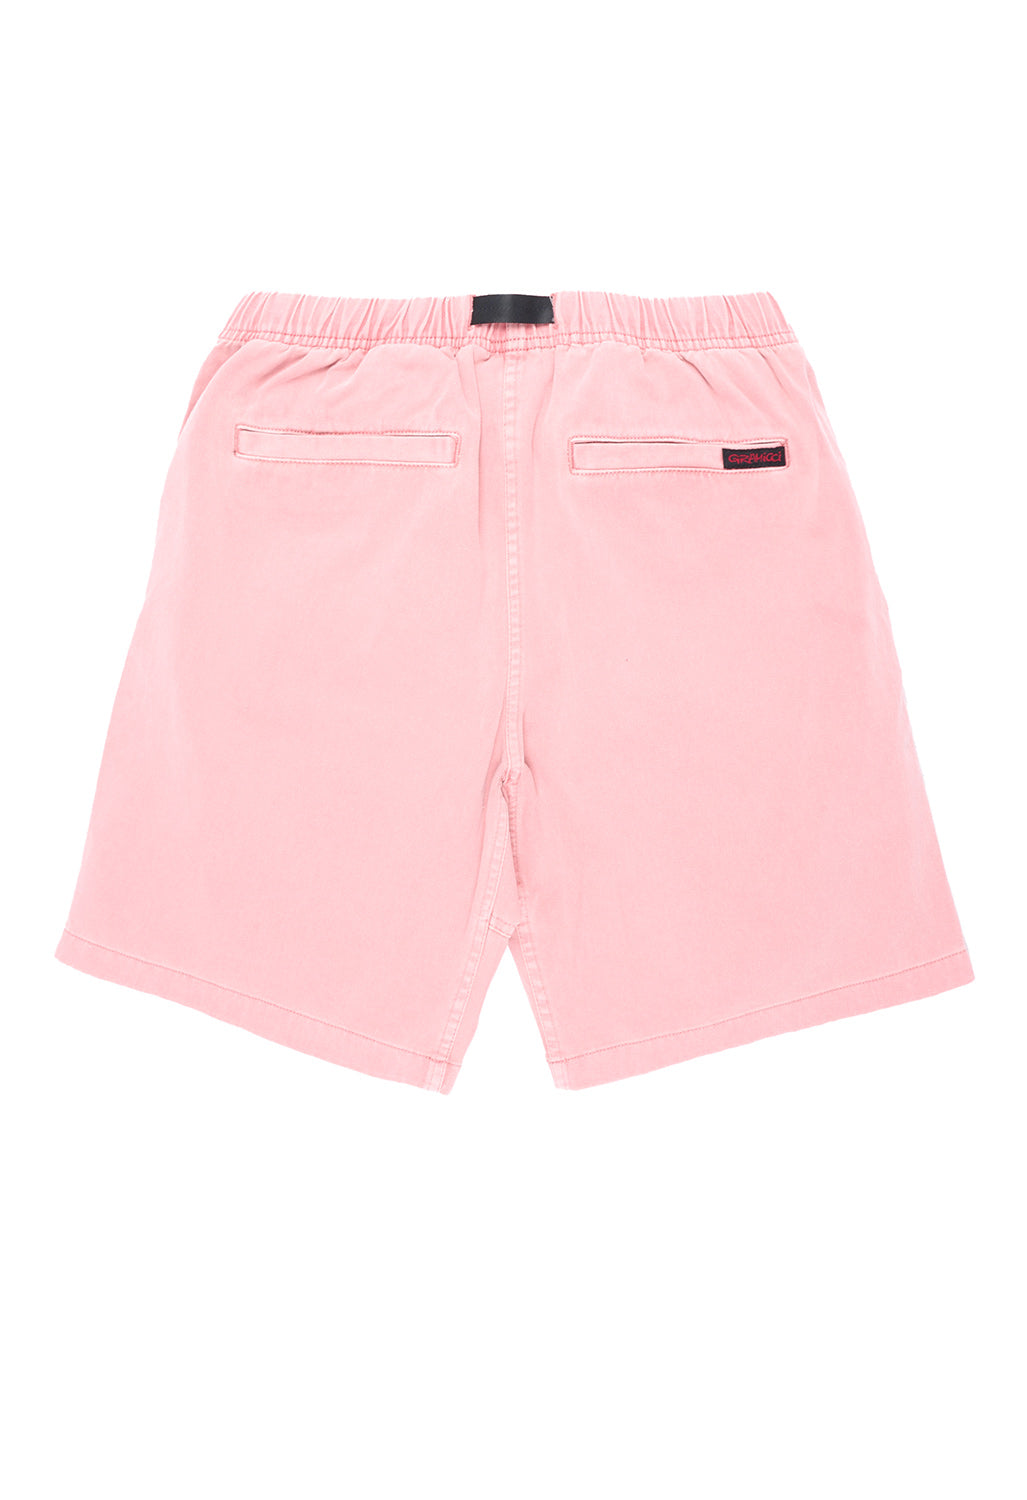 Gramicci Men's Pigment Dye G Shorts - Coral